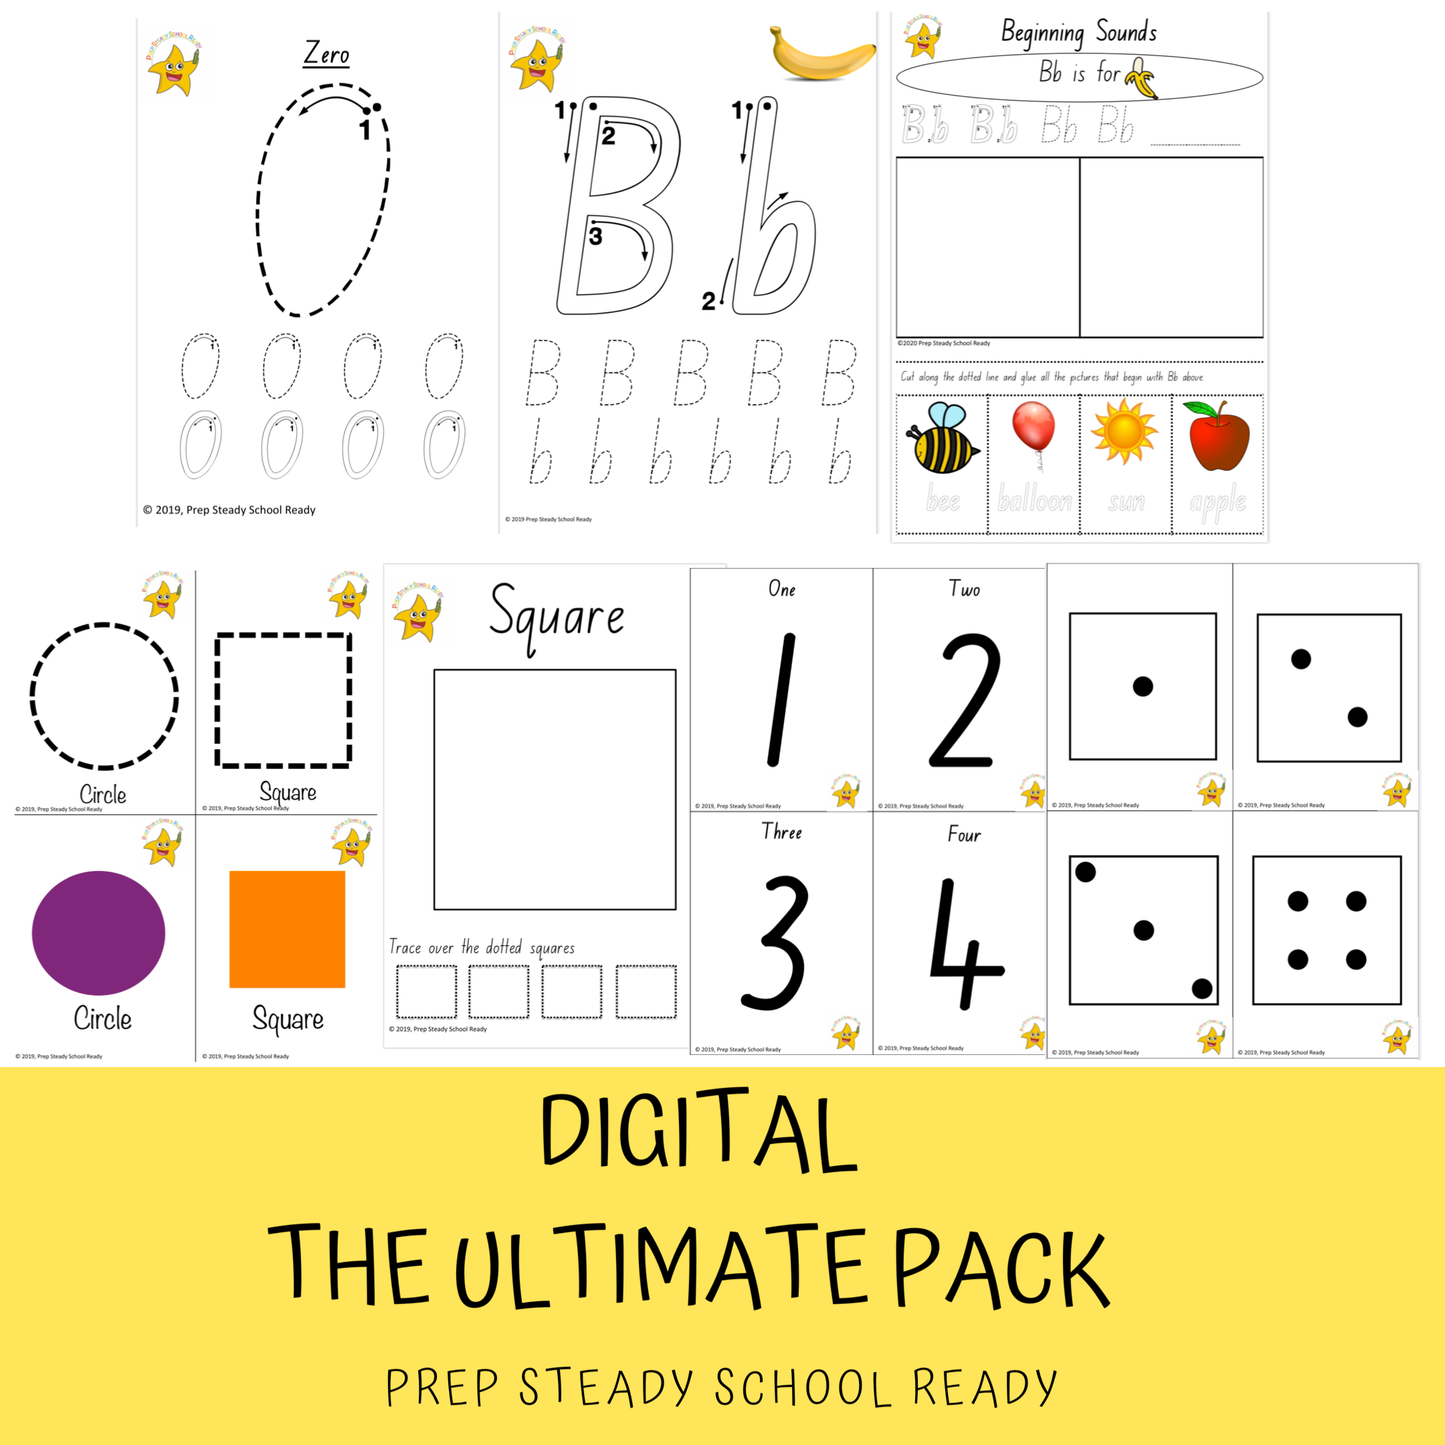 The Ultimate Pack VIC *Digital File*